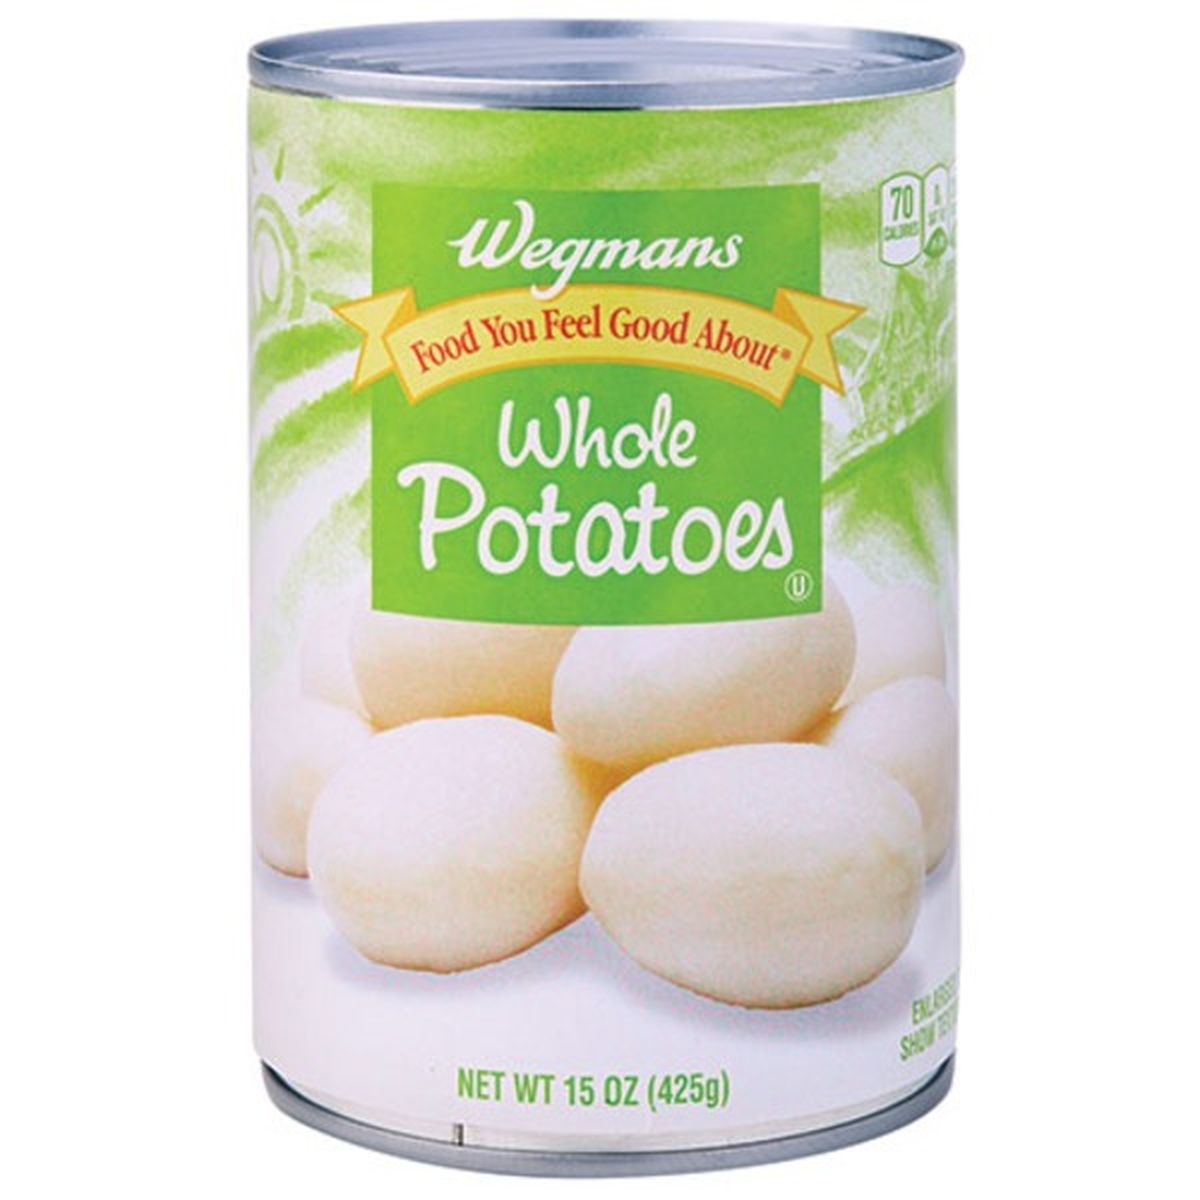 Calories in Wegmans Whole Potatoes